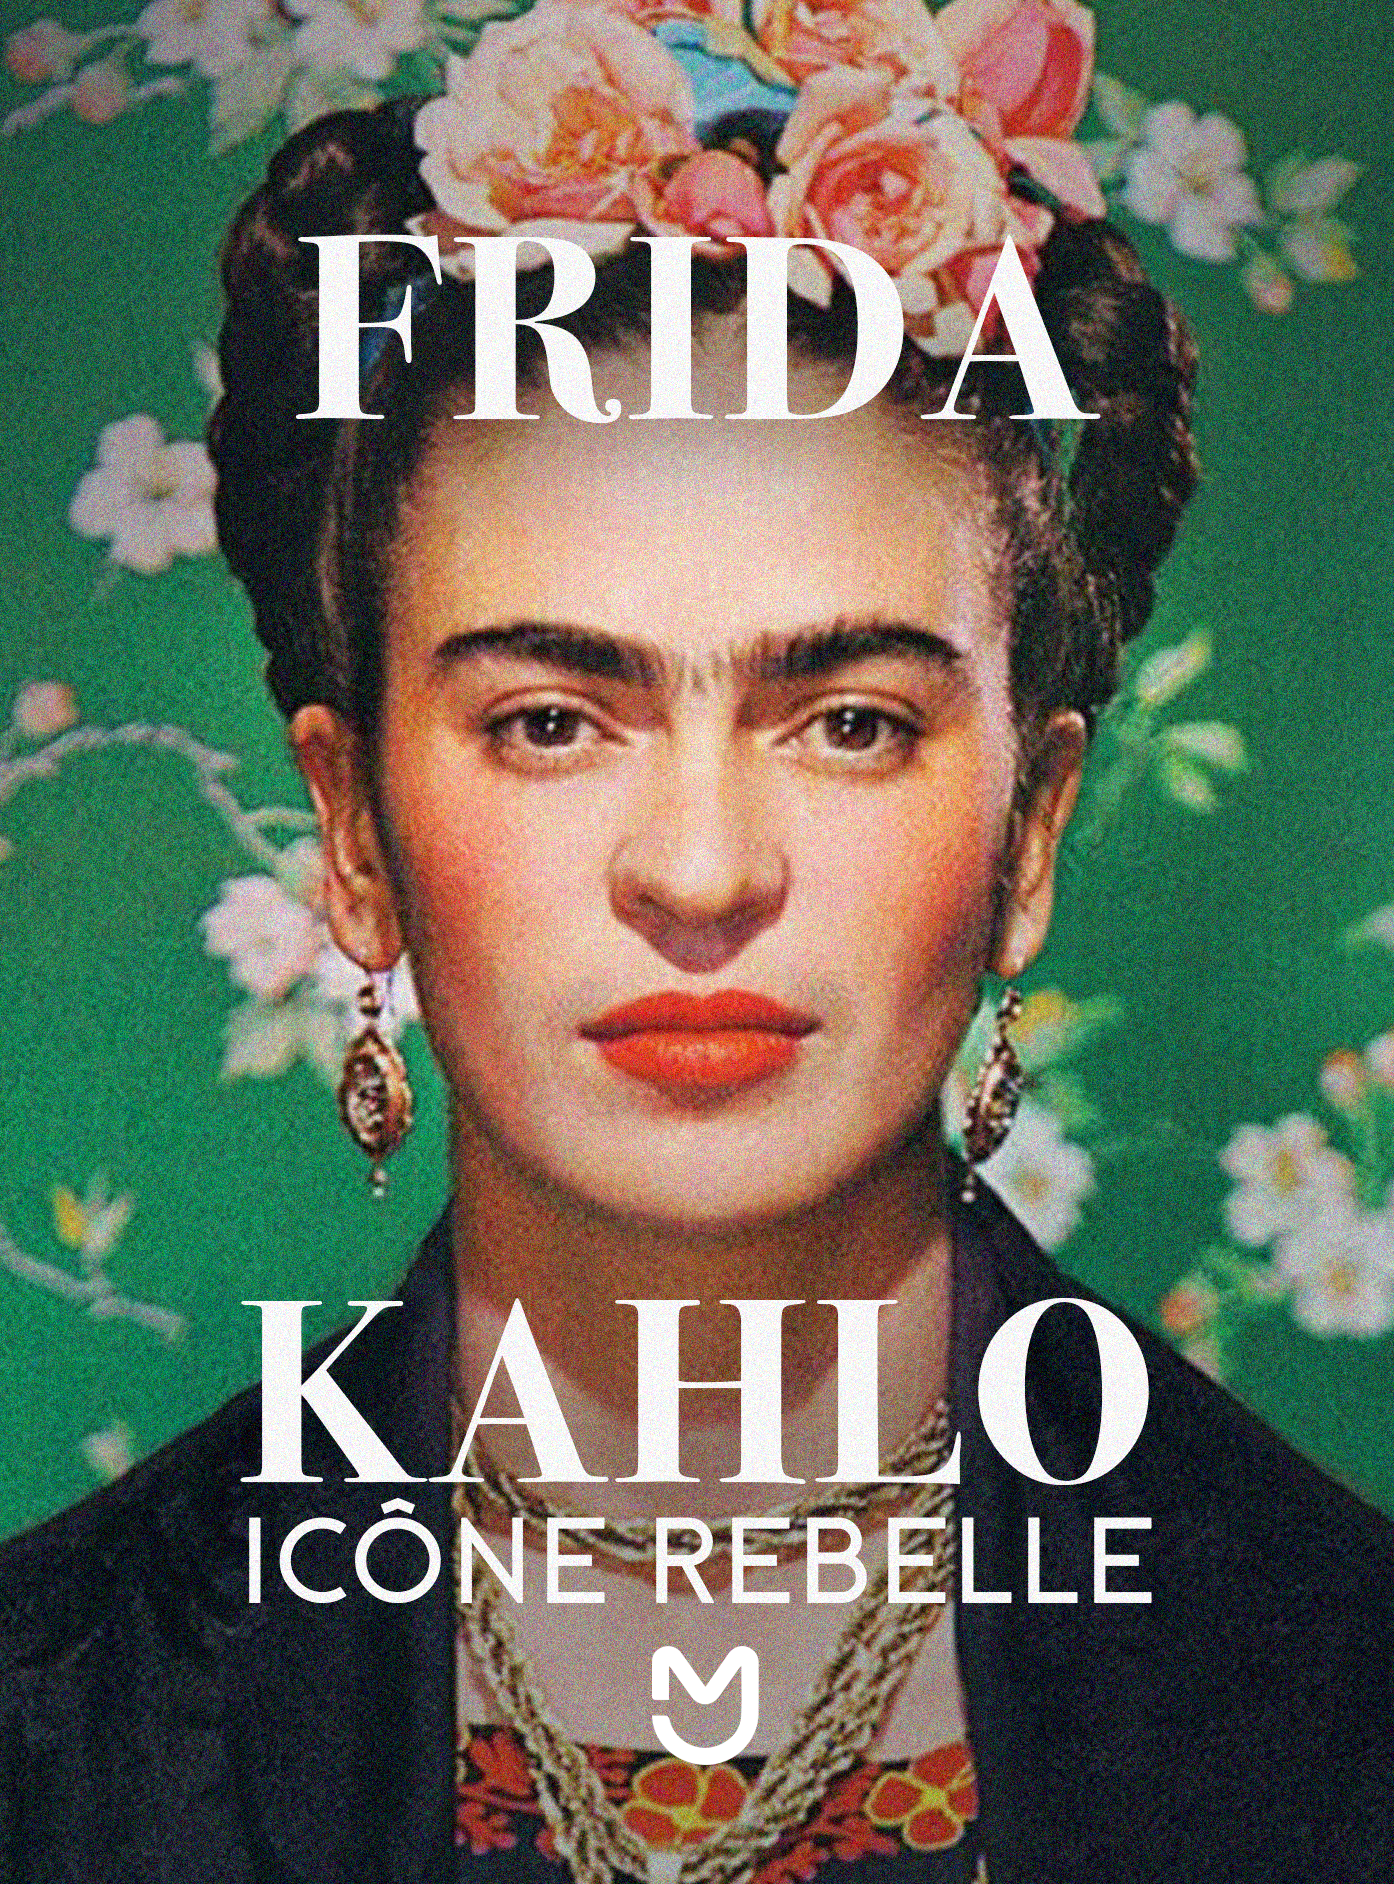 Frida Kahlo, icone rebelle